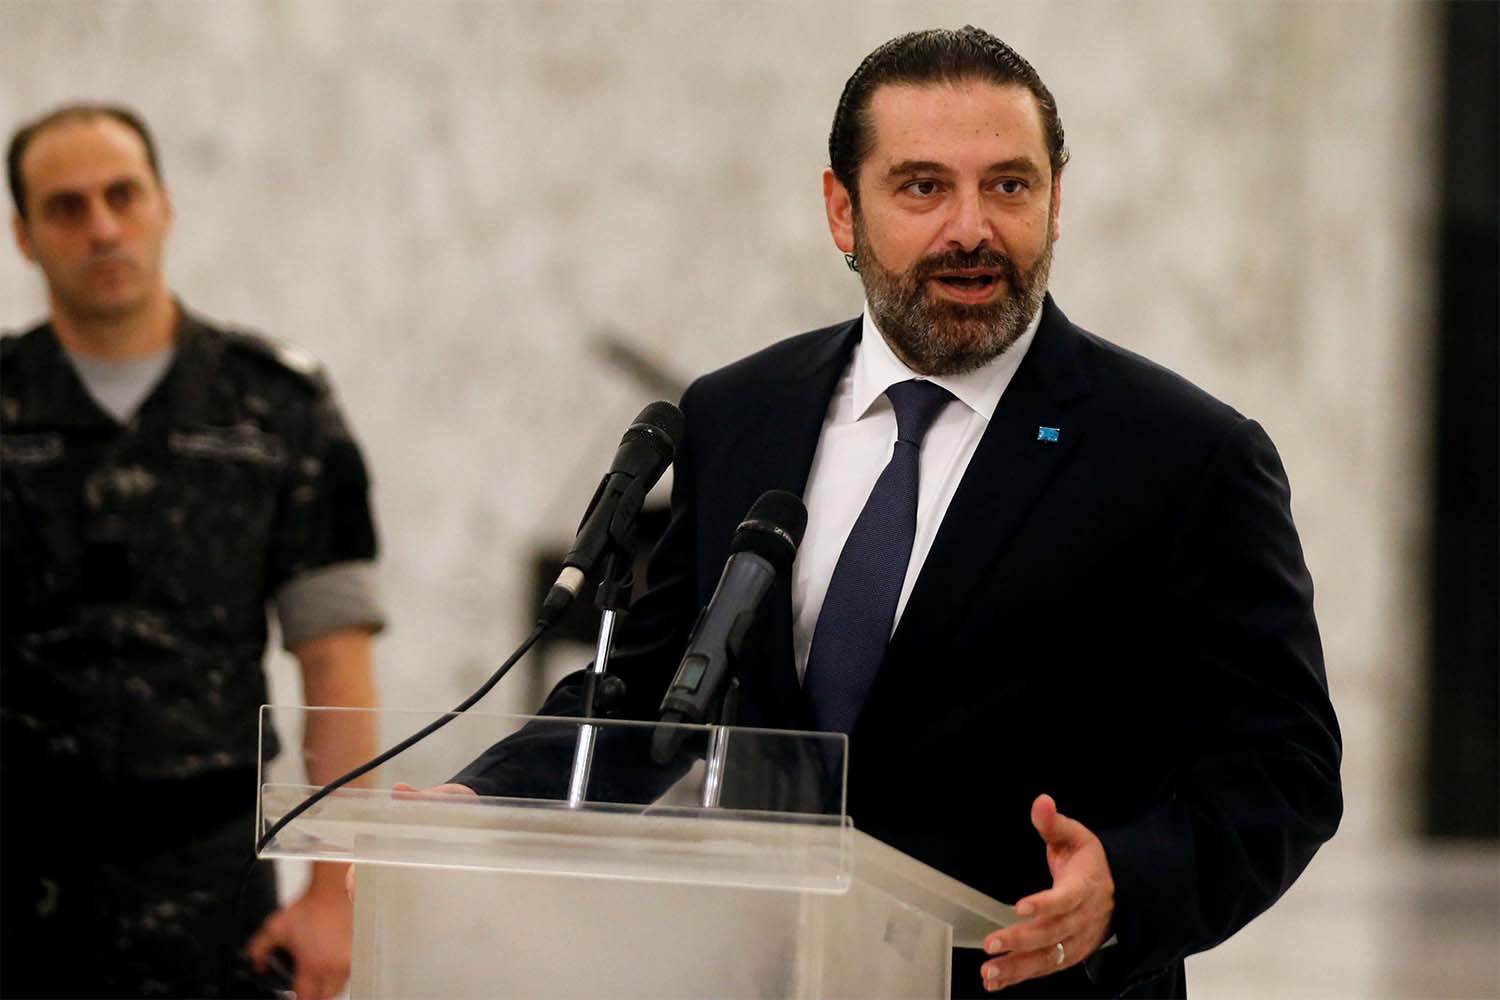 Saad al-Hariri resigned as prime minister in late October 